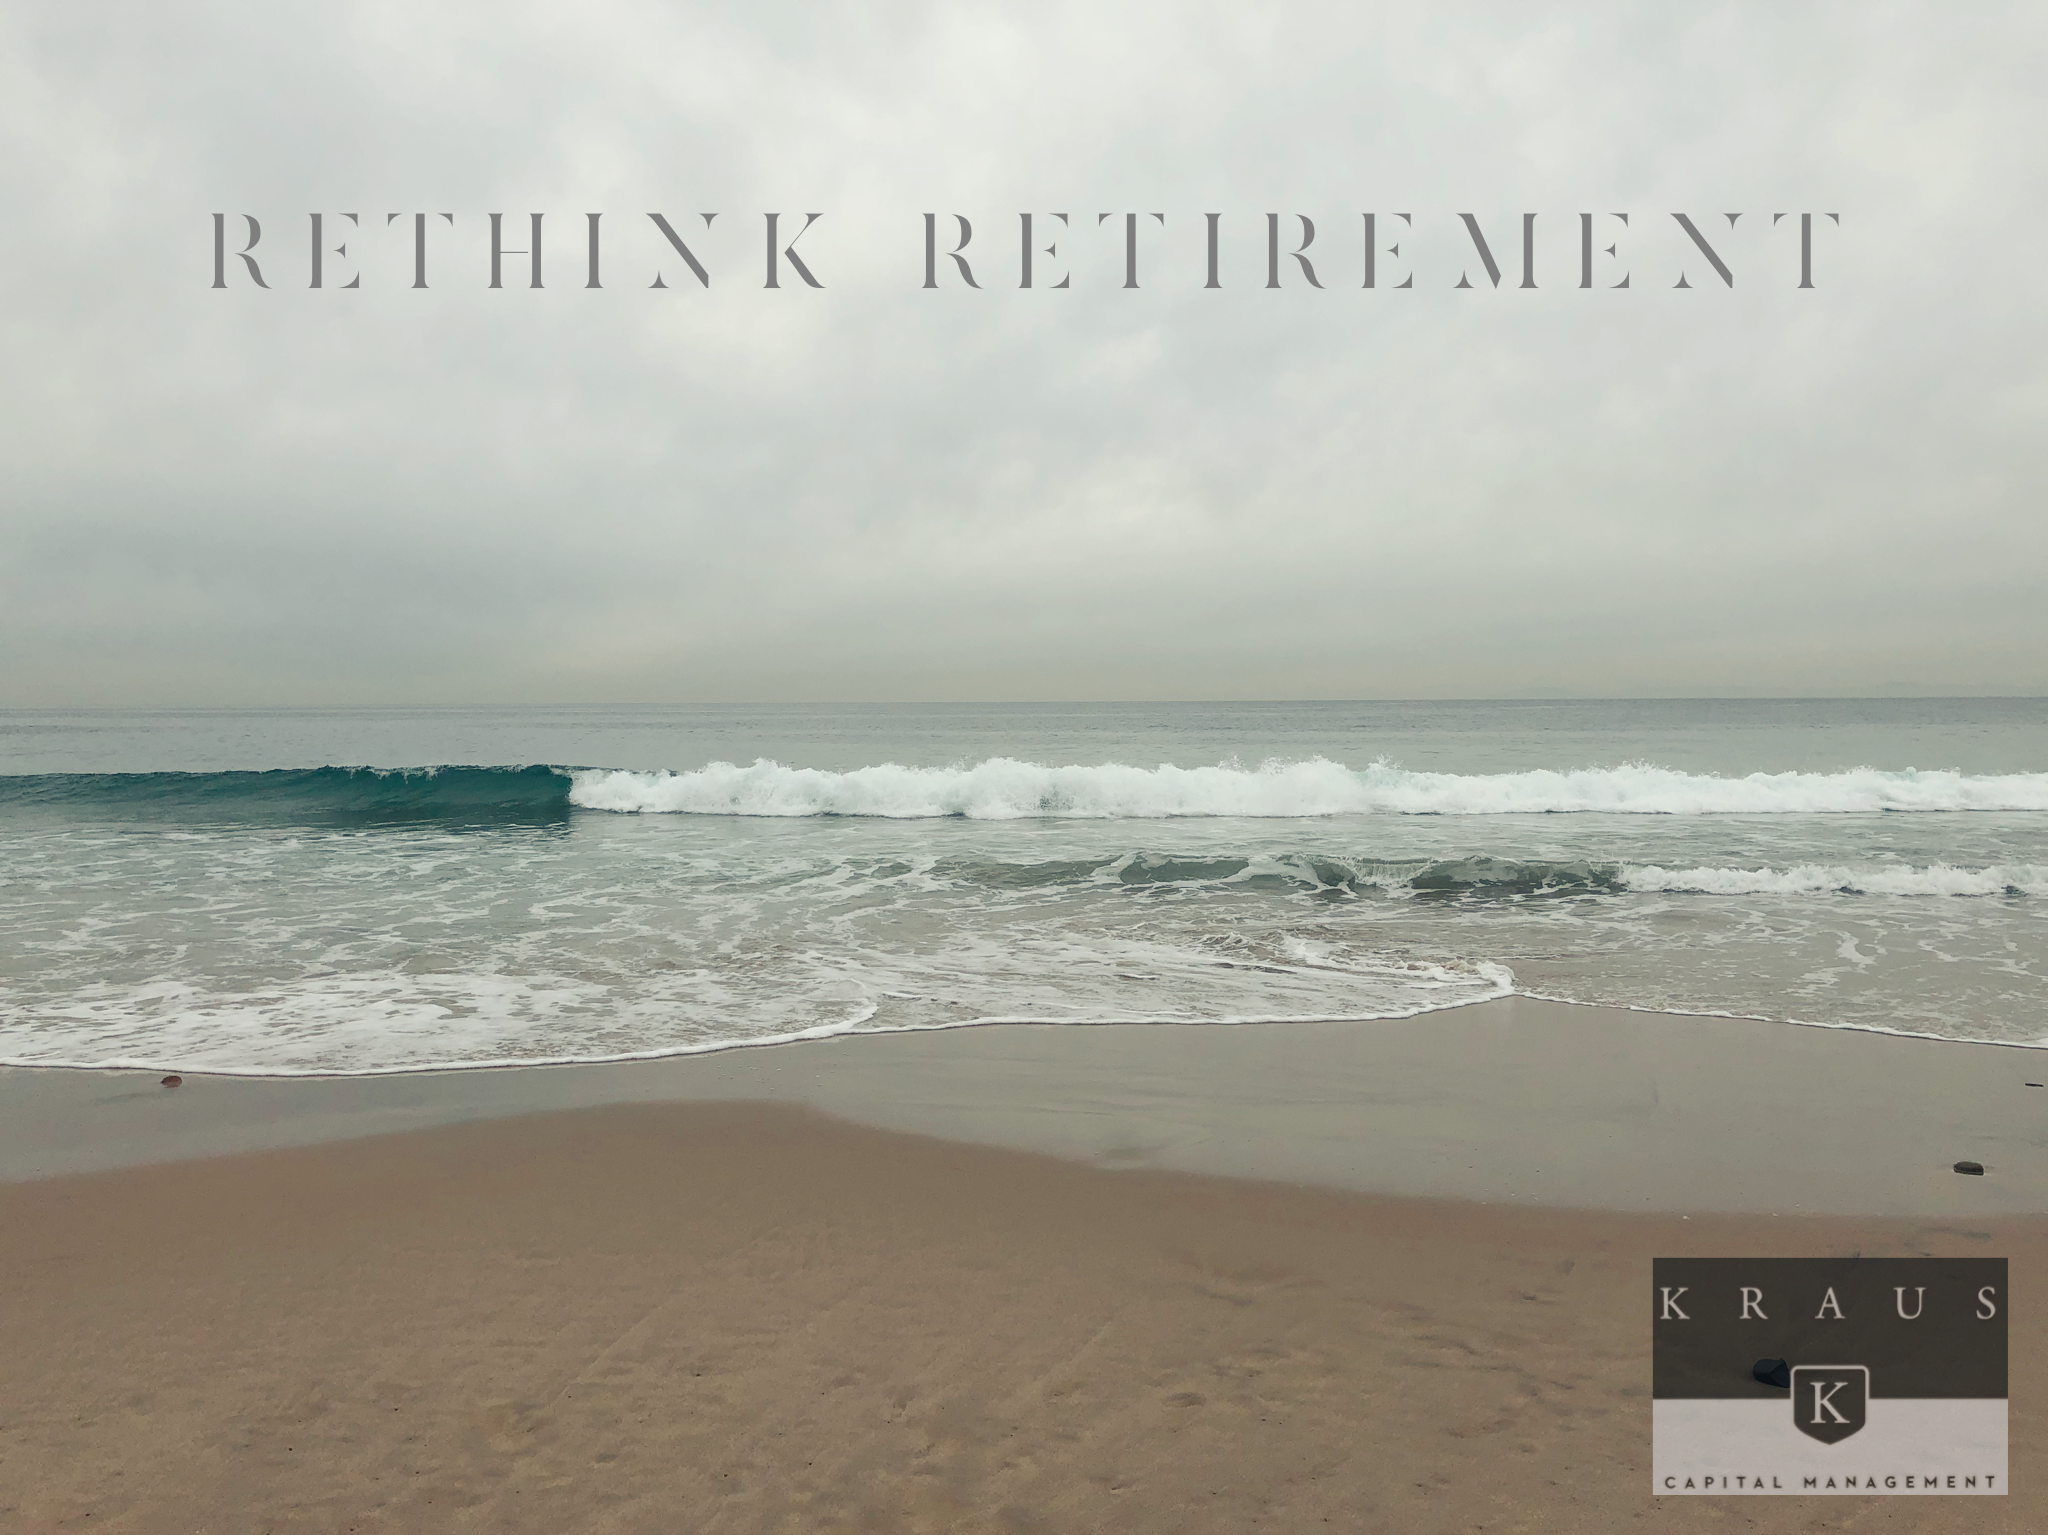 Rethink Retirement